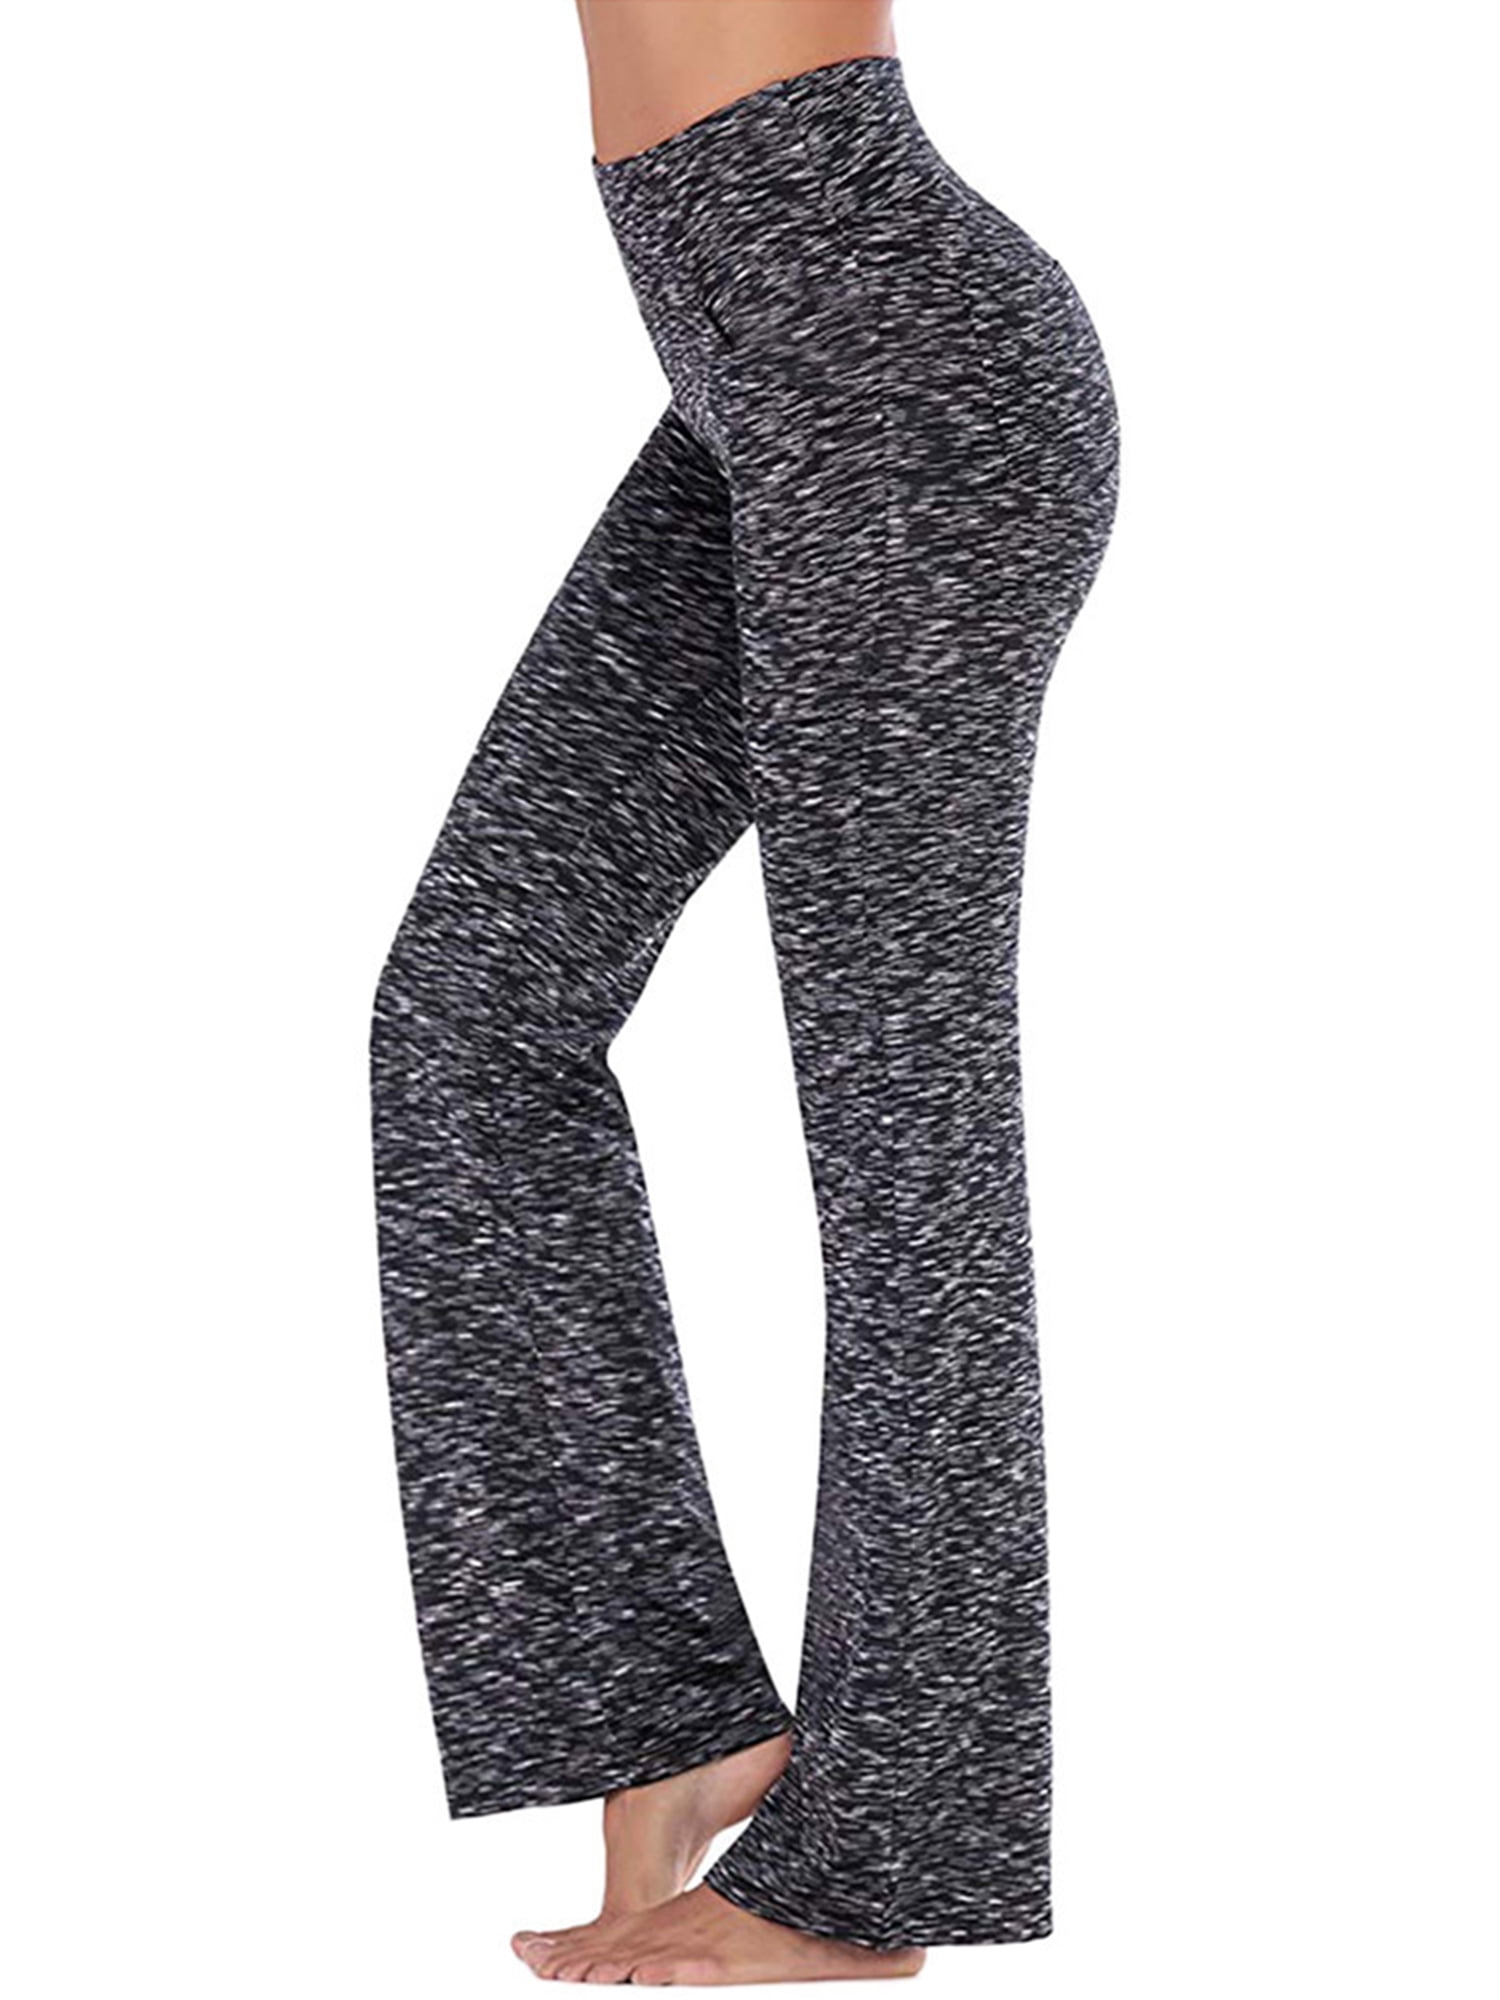 AMaVo - Avamo Activewear Women's Bootleg Yoga Pants Tummy Control High ...